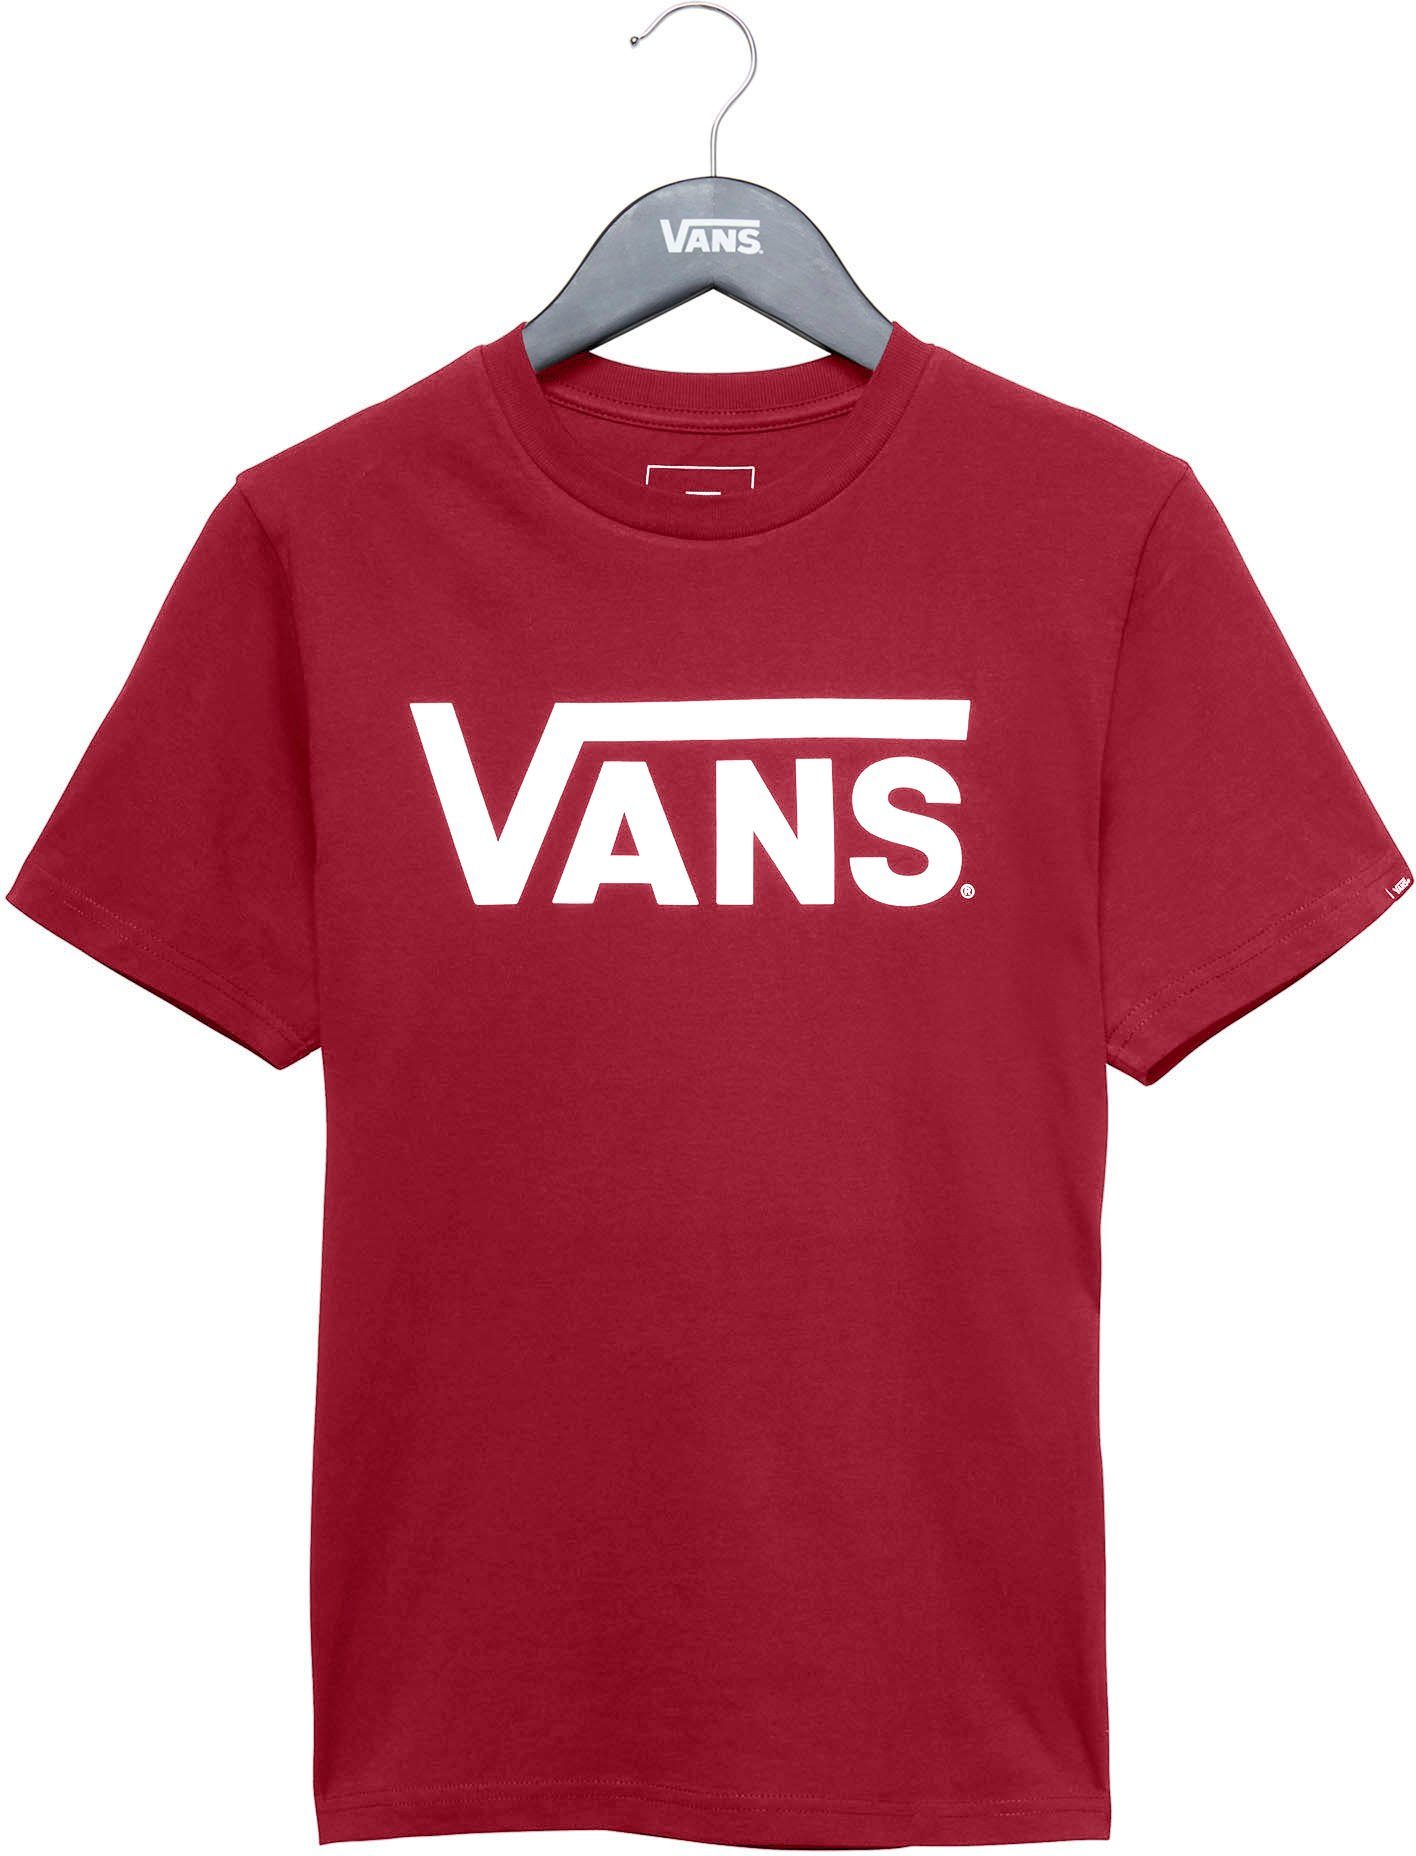 VANS T-Shirt chili Vans CLASSIC pepper BOYS